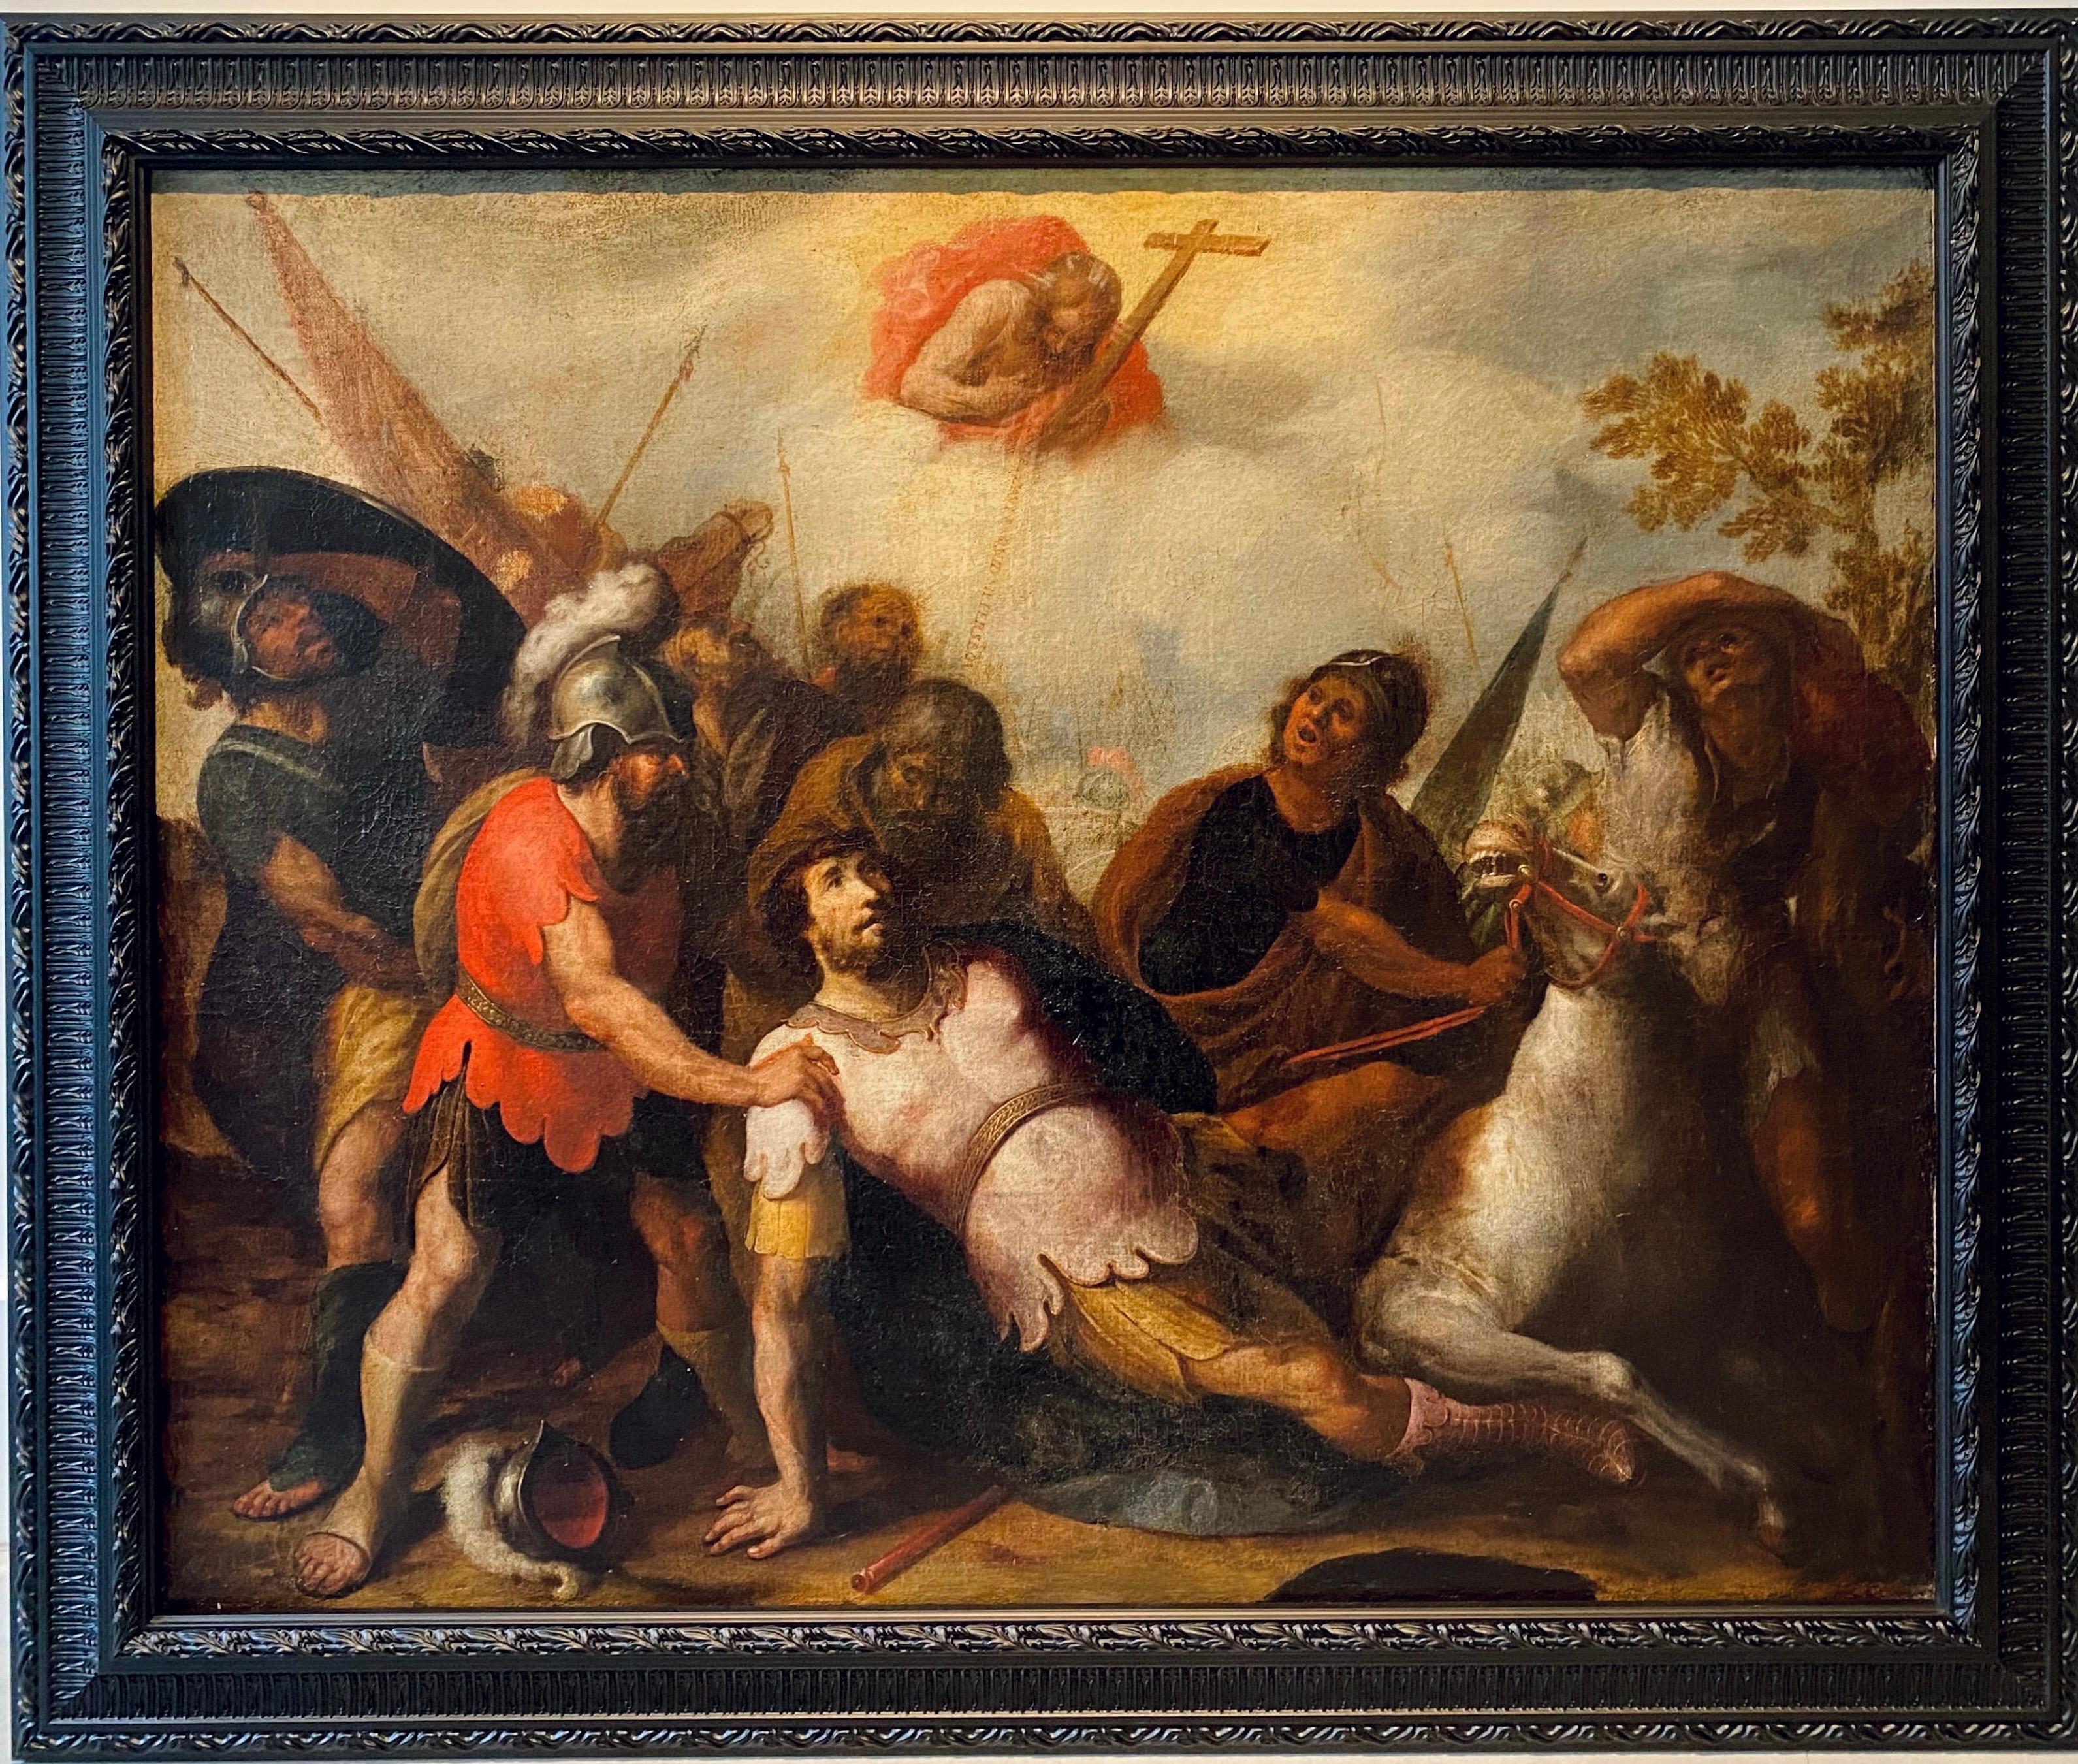 Juan Antonio de Frías y Escalante Landscape Painting - Spanish Old Master Painting - The fall of Saint Paul - Christianity Religious